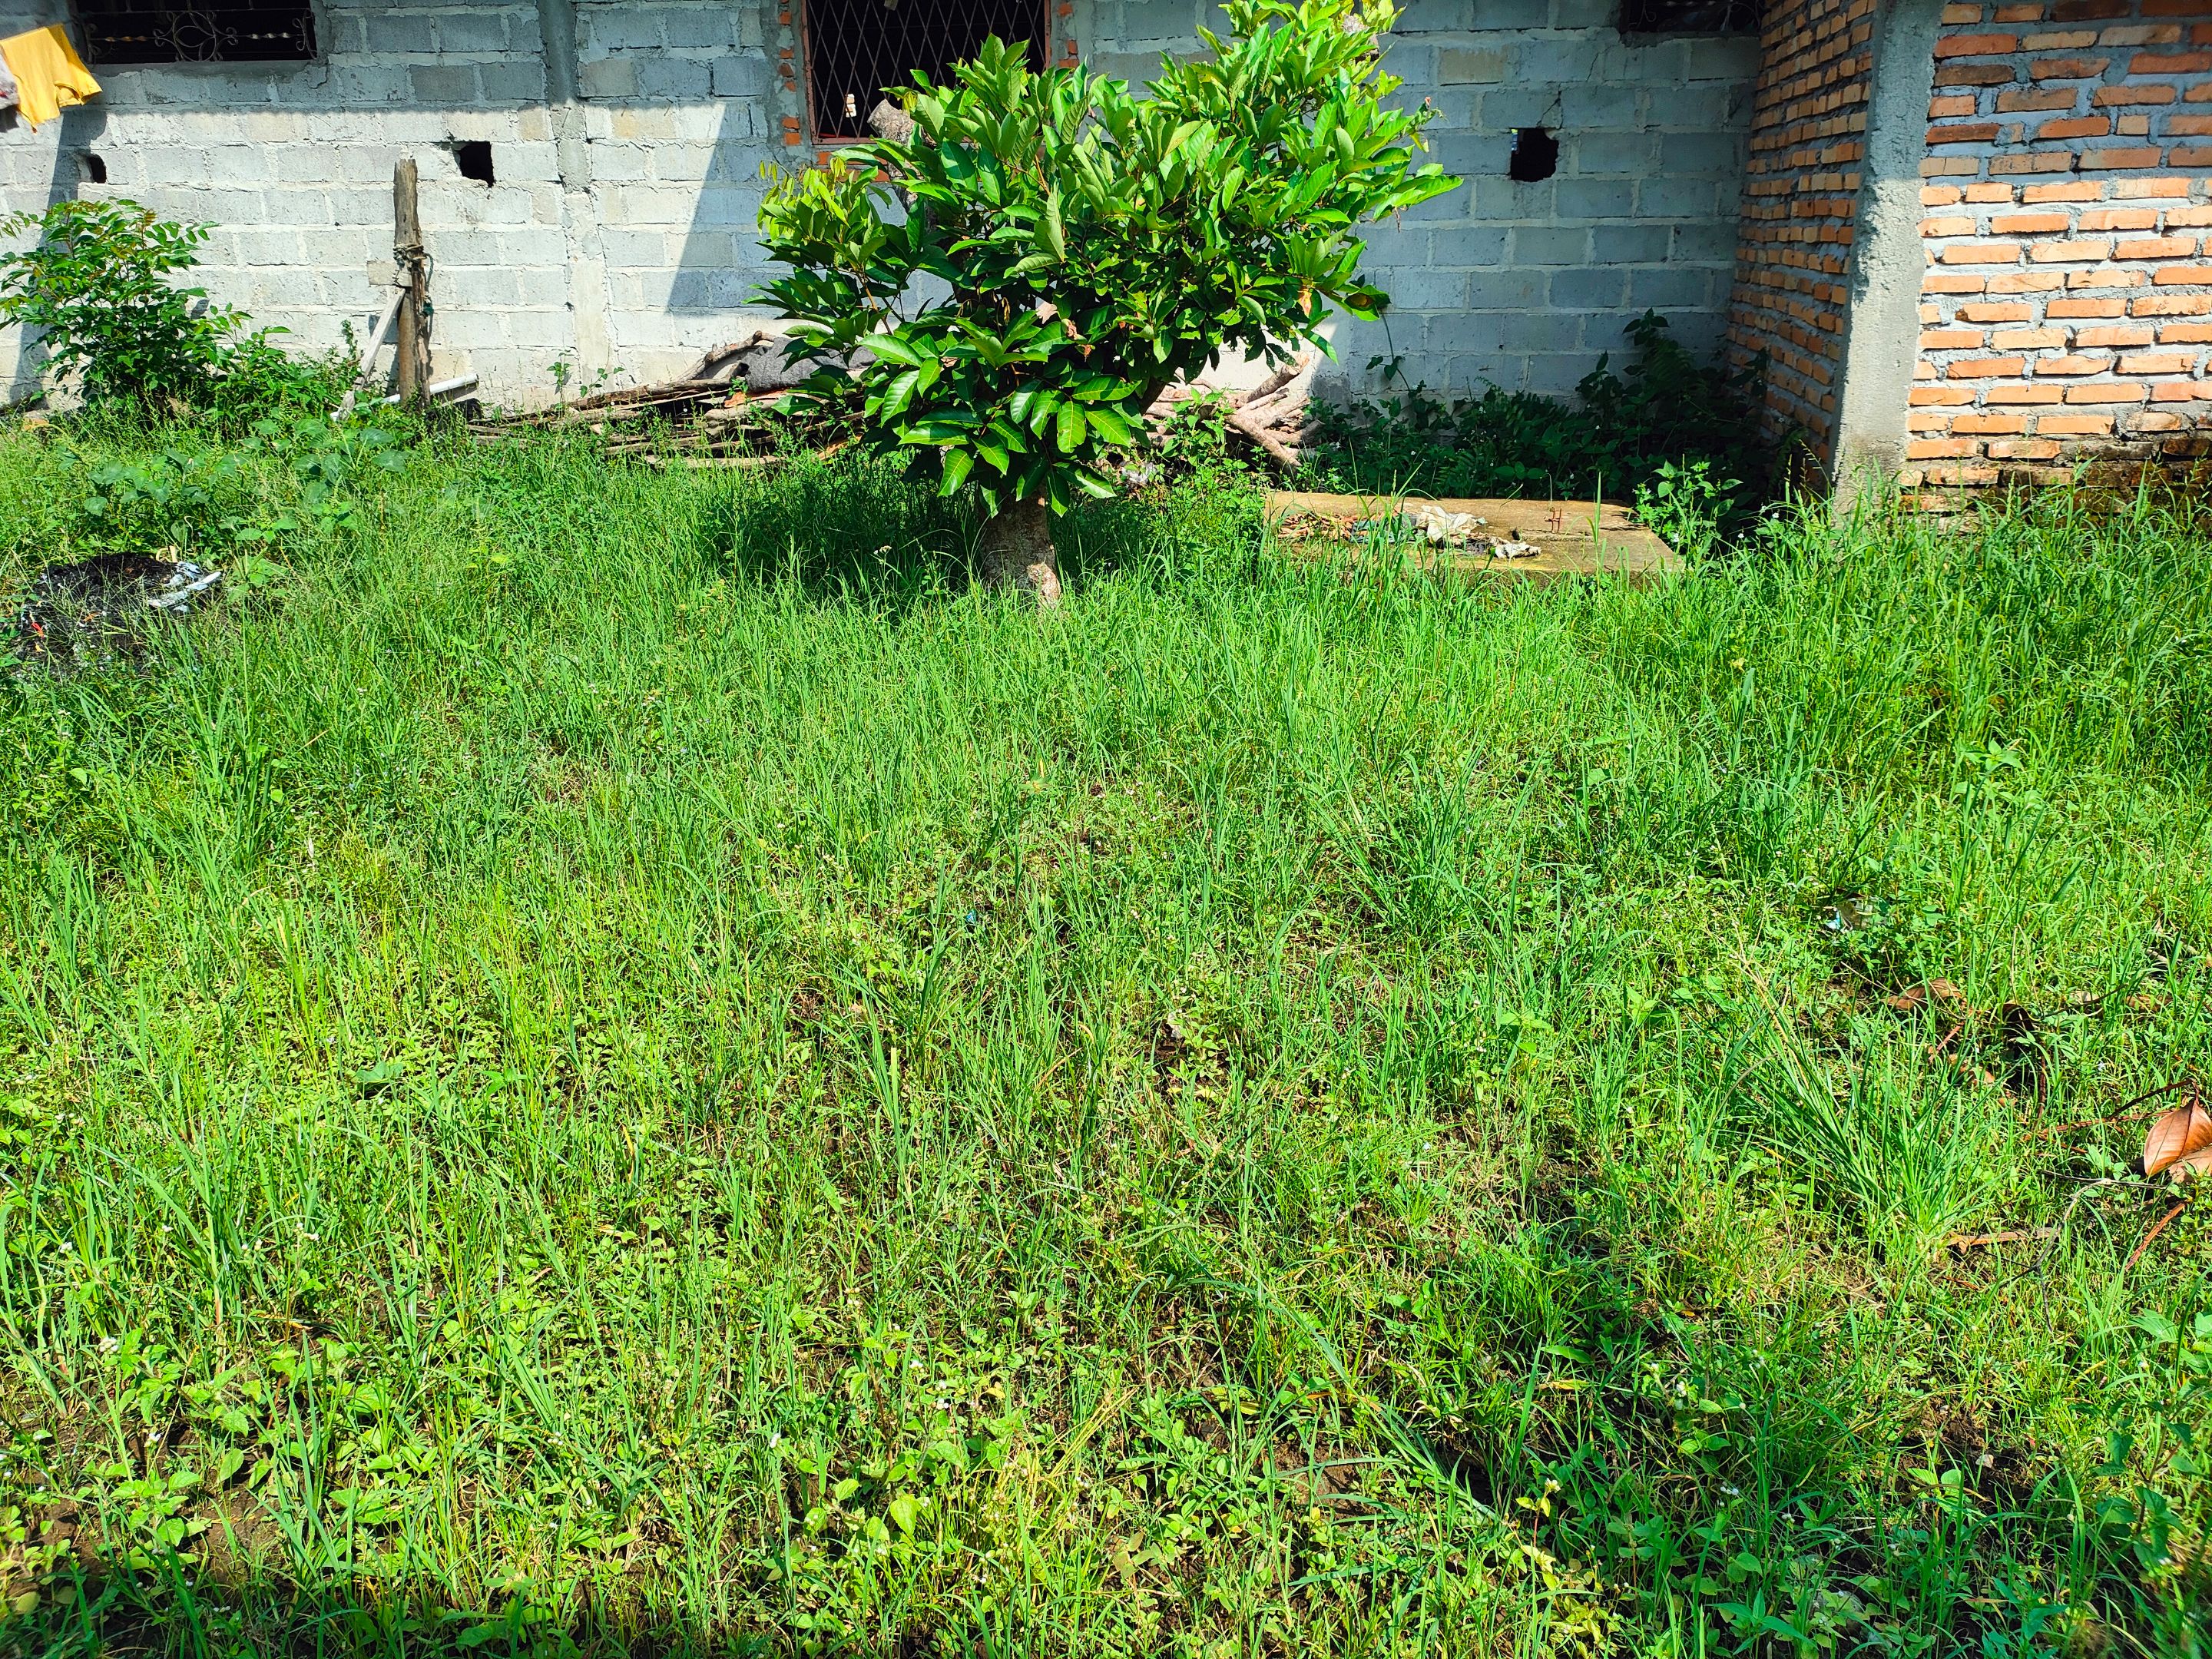 @umirais/plant-lemon-grass-to-eradicate-weeds-and-take-advantage-of-vacant-land